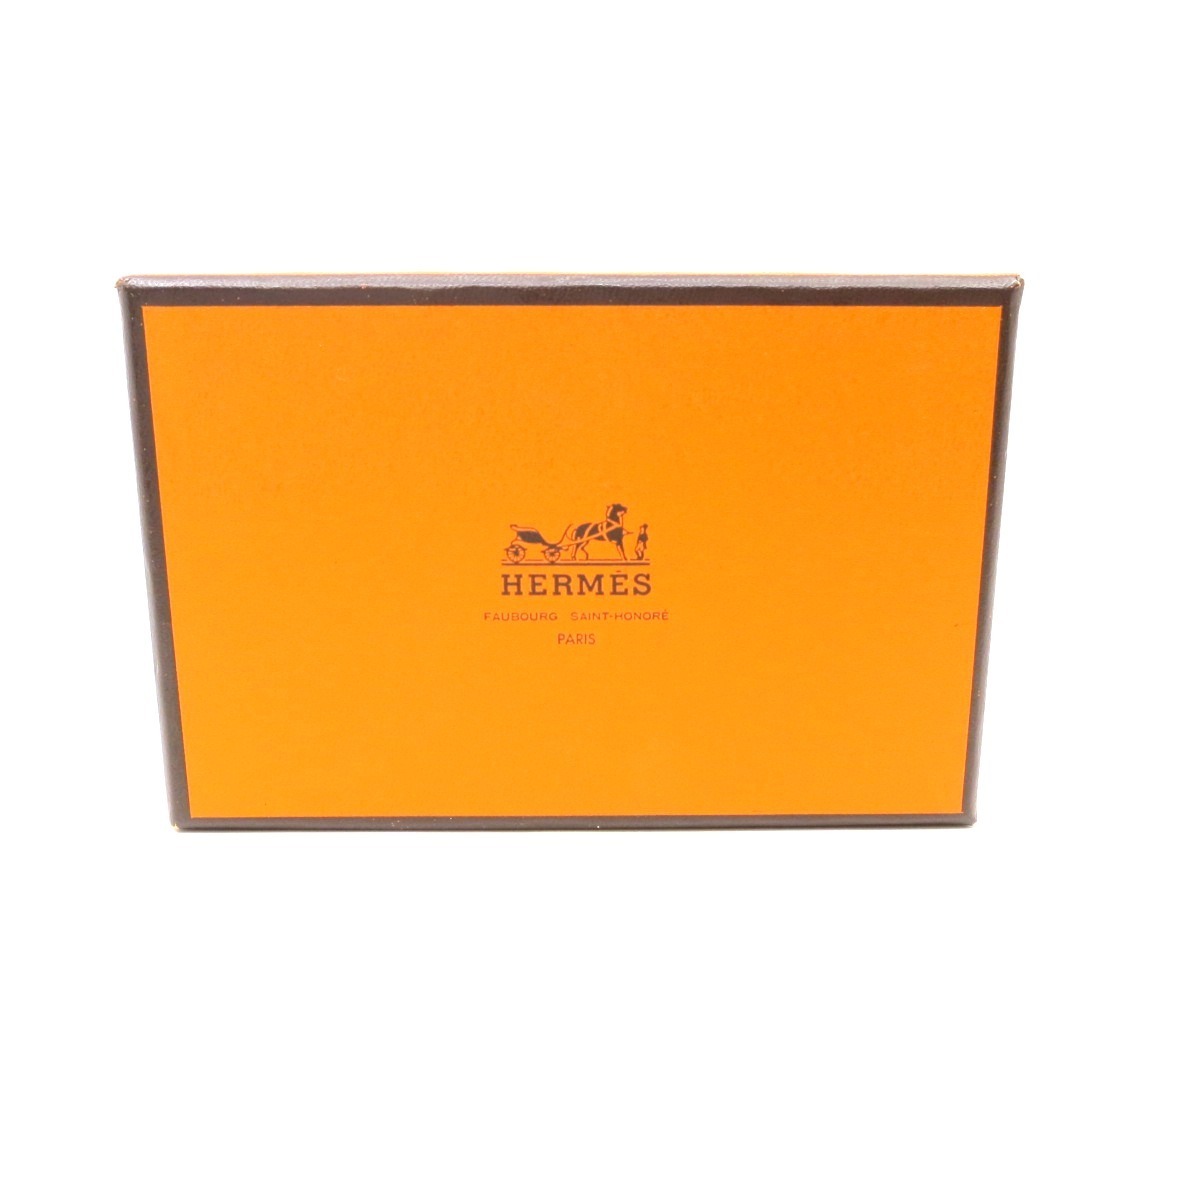 Authentic HERMES Sac Orange Bag Charm Leather #W602047